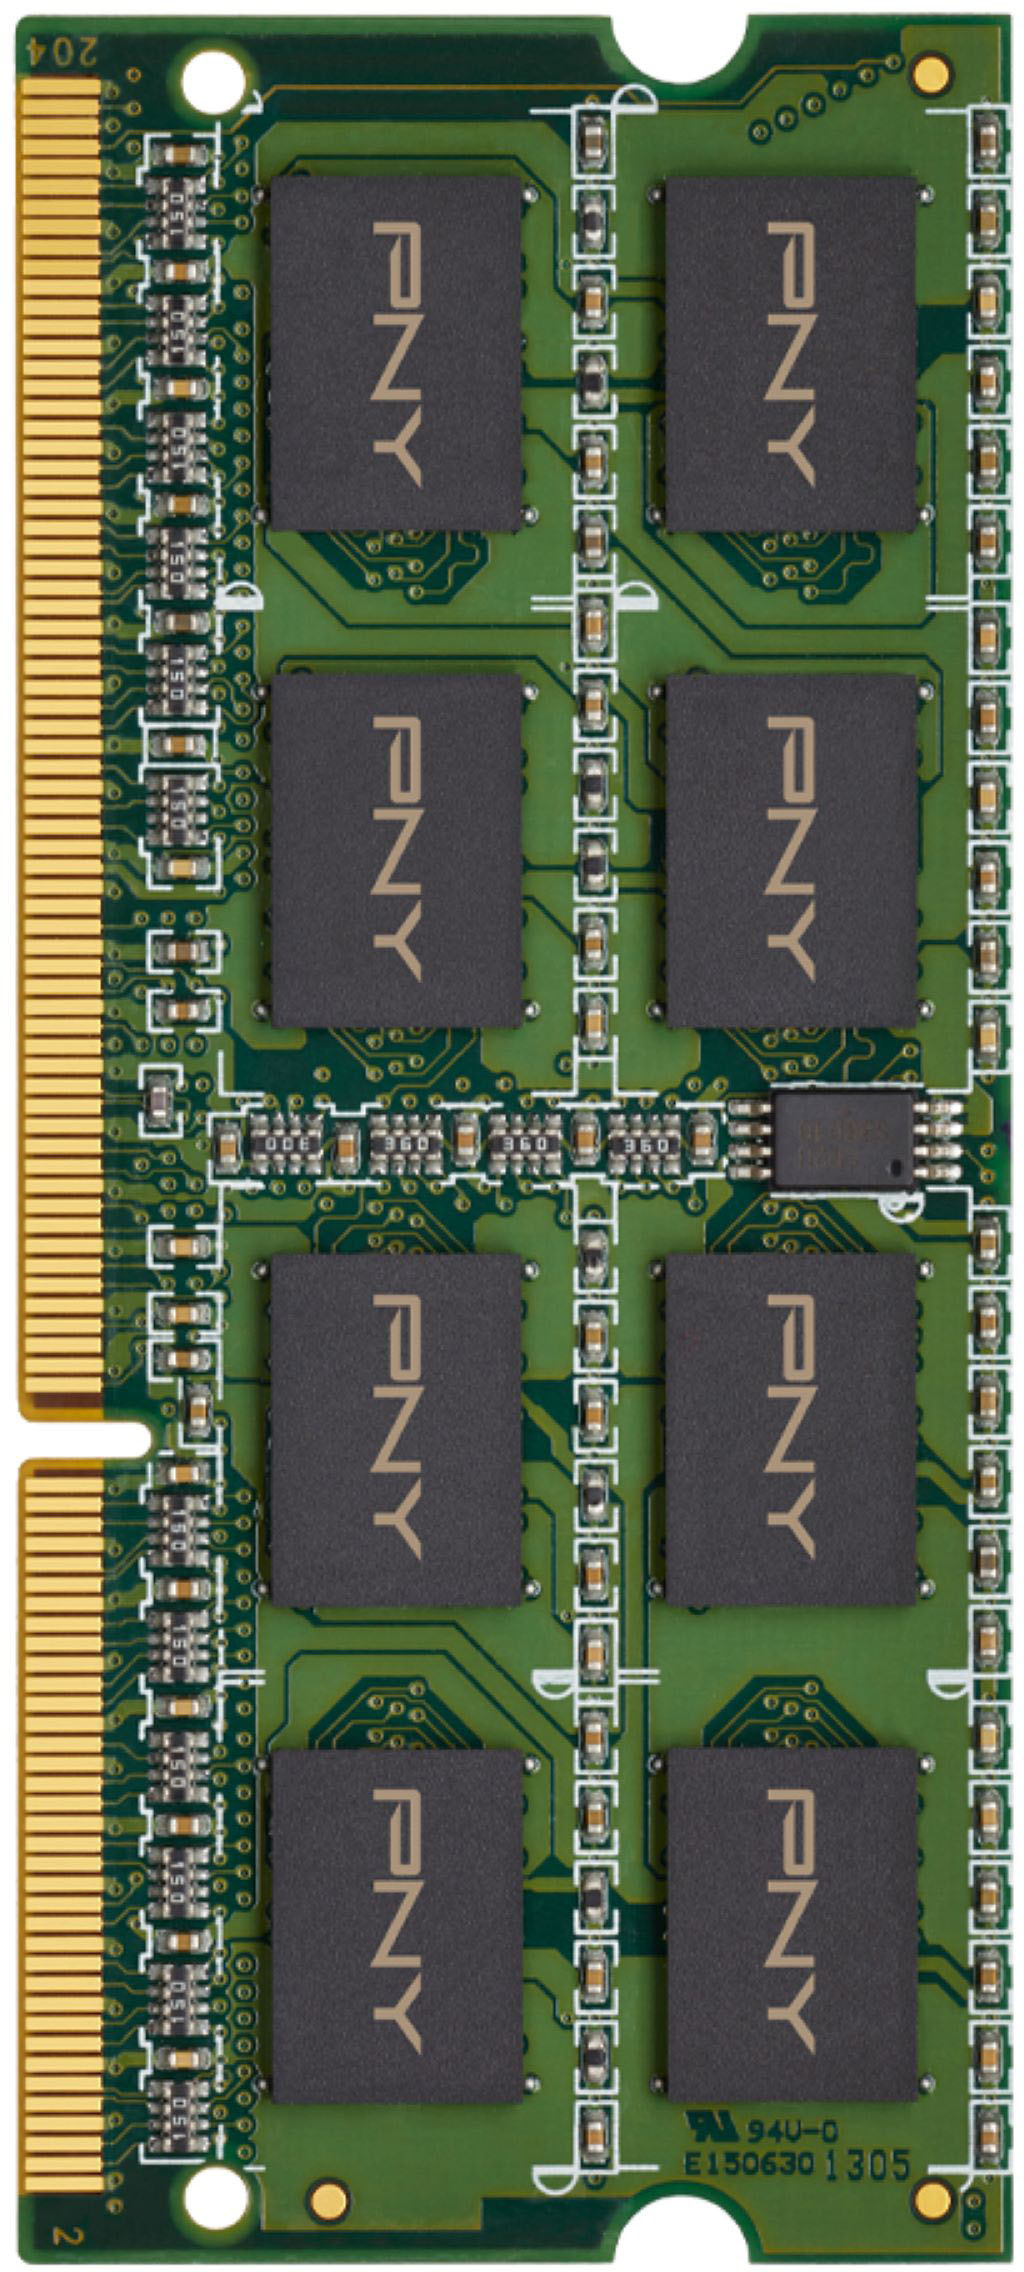 PNY 8GB 1600 MHz DDR3 SoDIMM Laptop Memory Green MN8GSD31600LV - Best